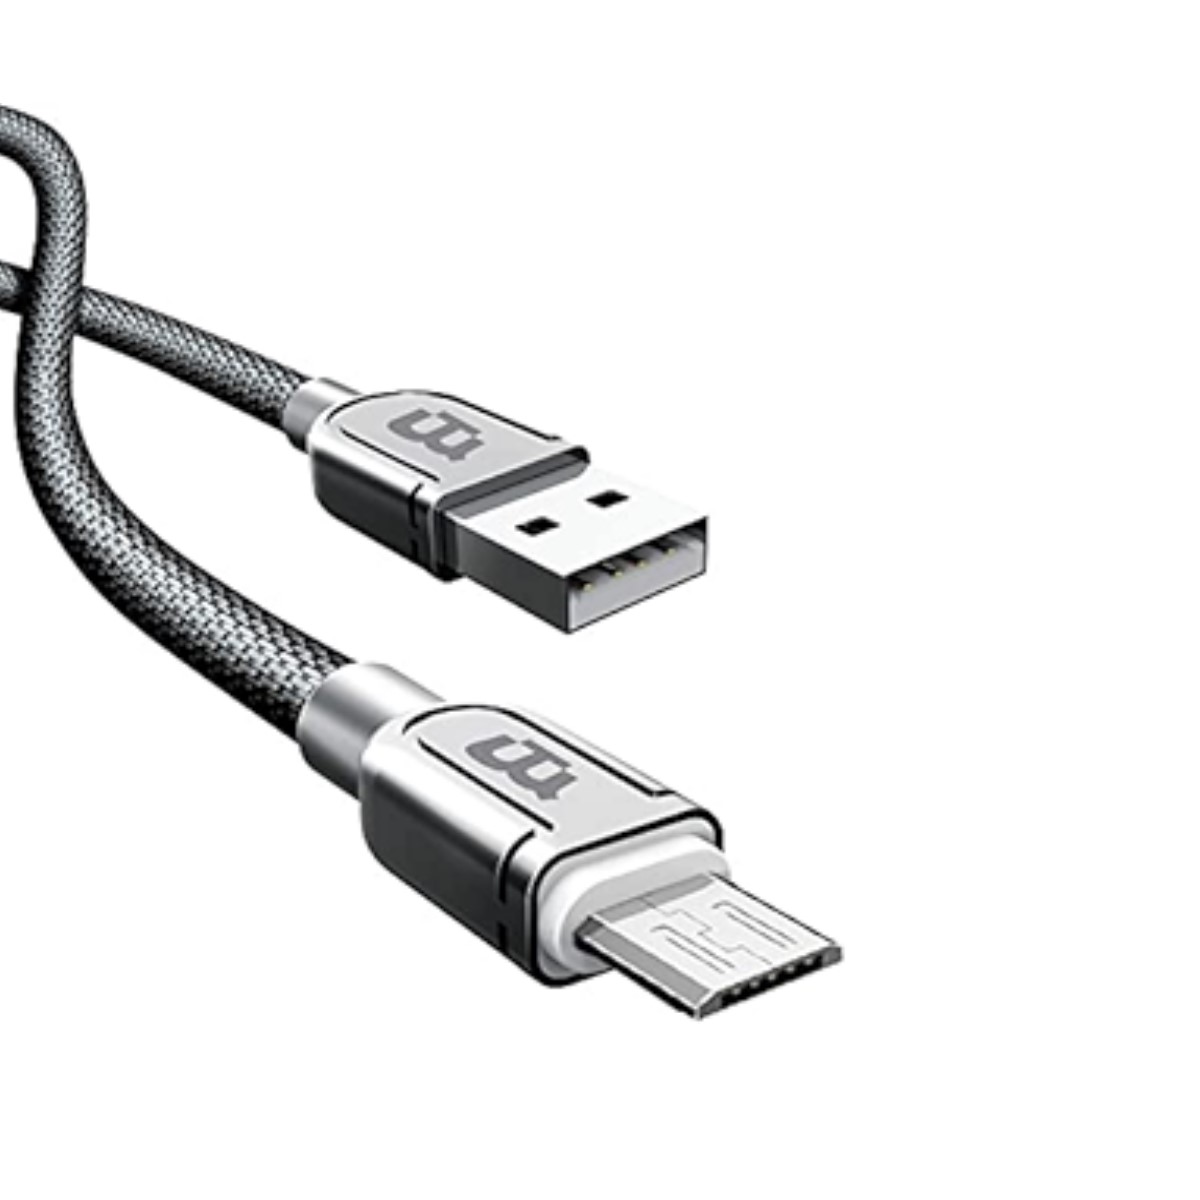 CABLE METALICO BLACKPCS EXCELENCE MICRO USB V8 PLATA 1M (CASMTE-3)